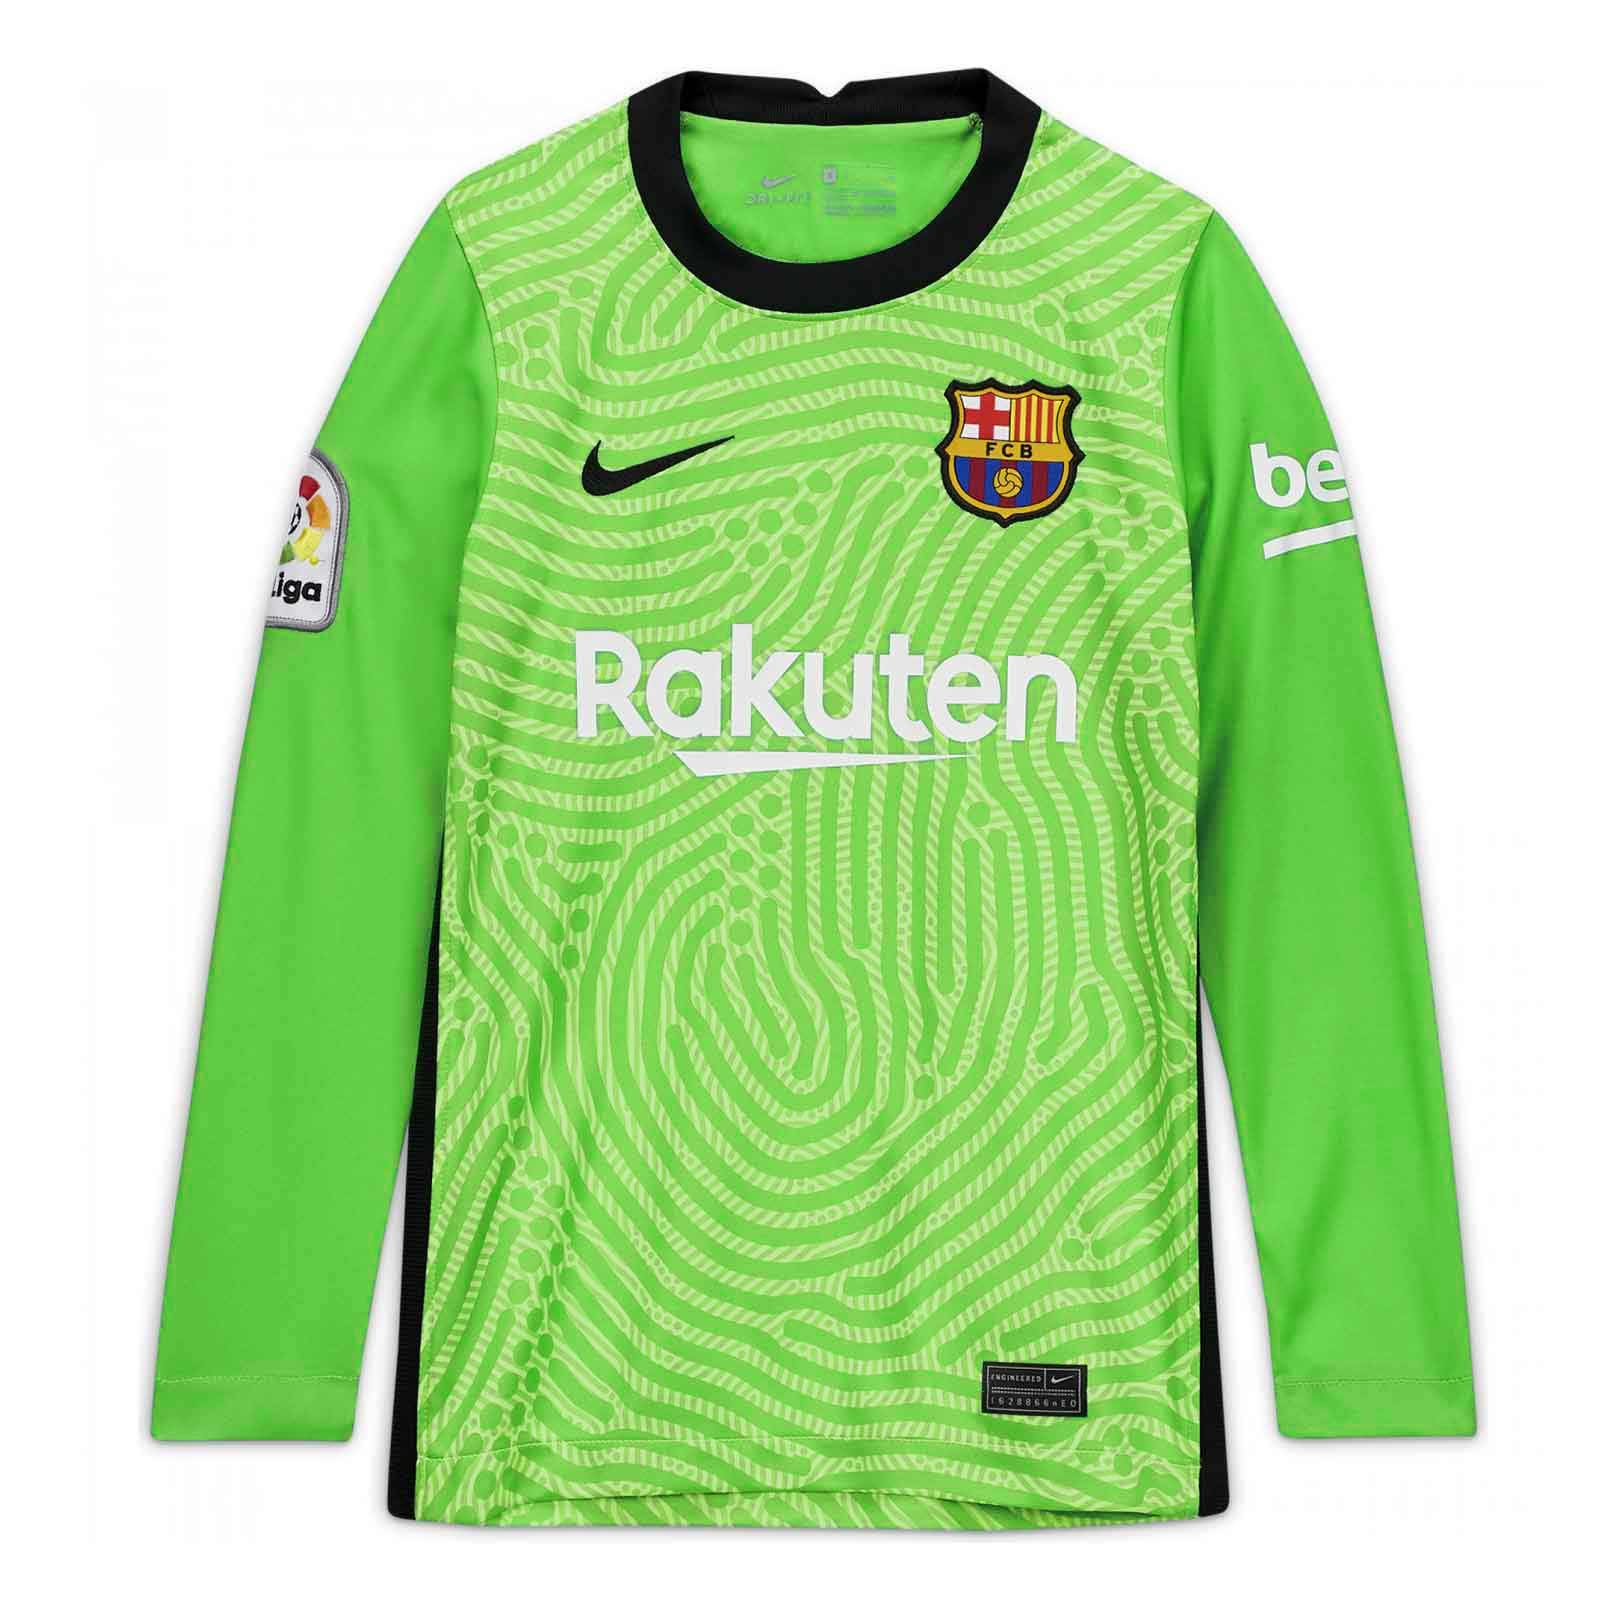 Camiseta Nike Barcelona niño portero 2020 2021